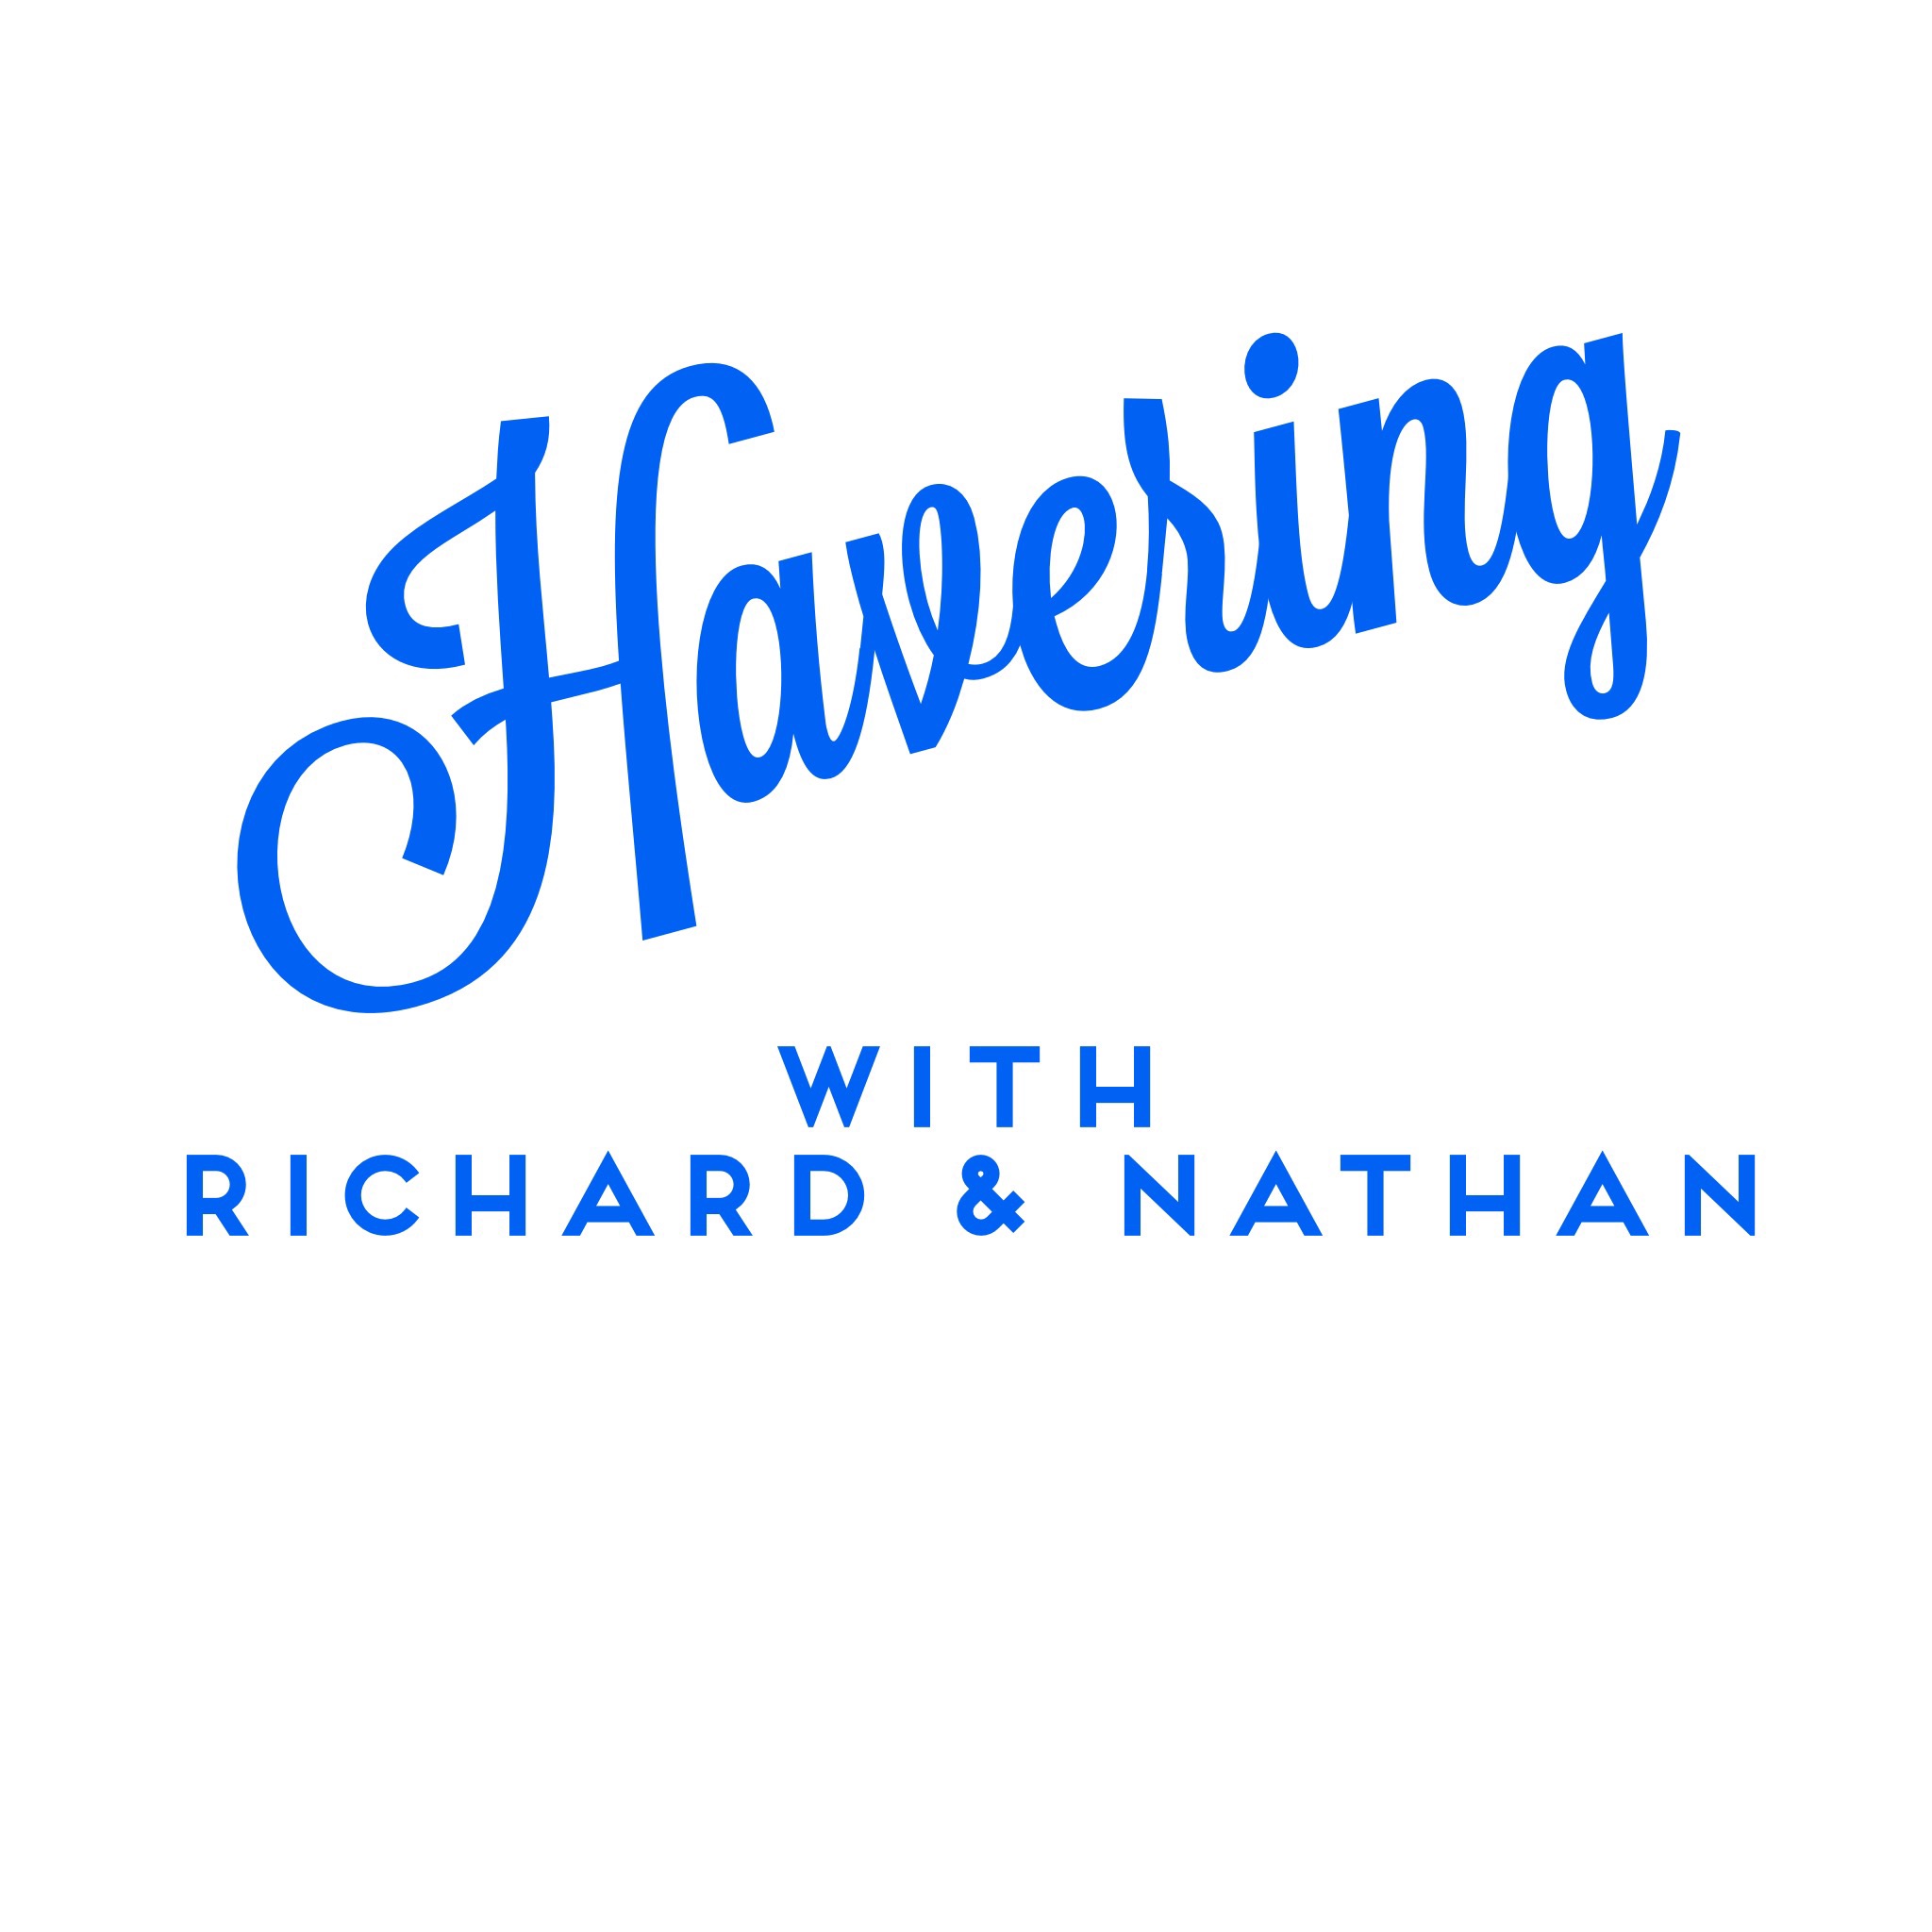 Havering with Richard & Nathan